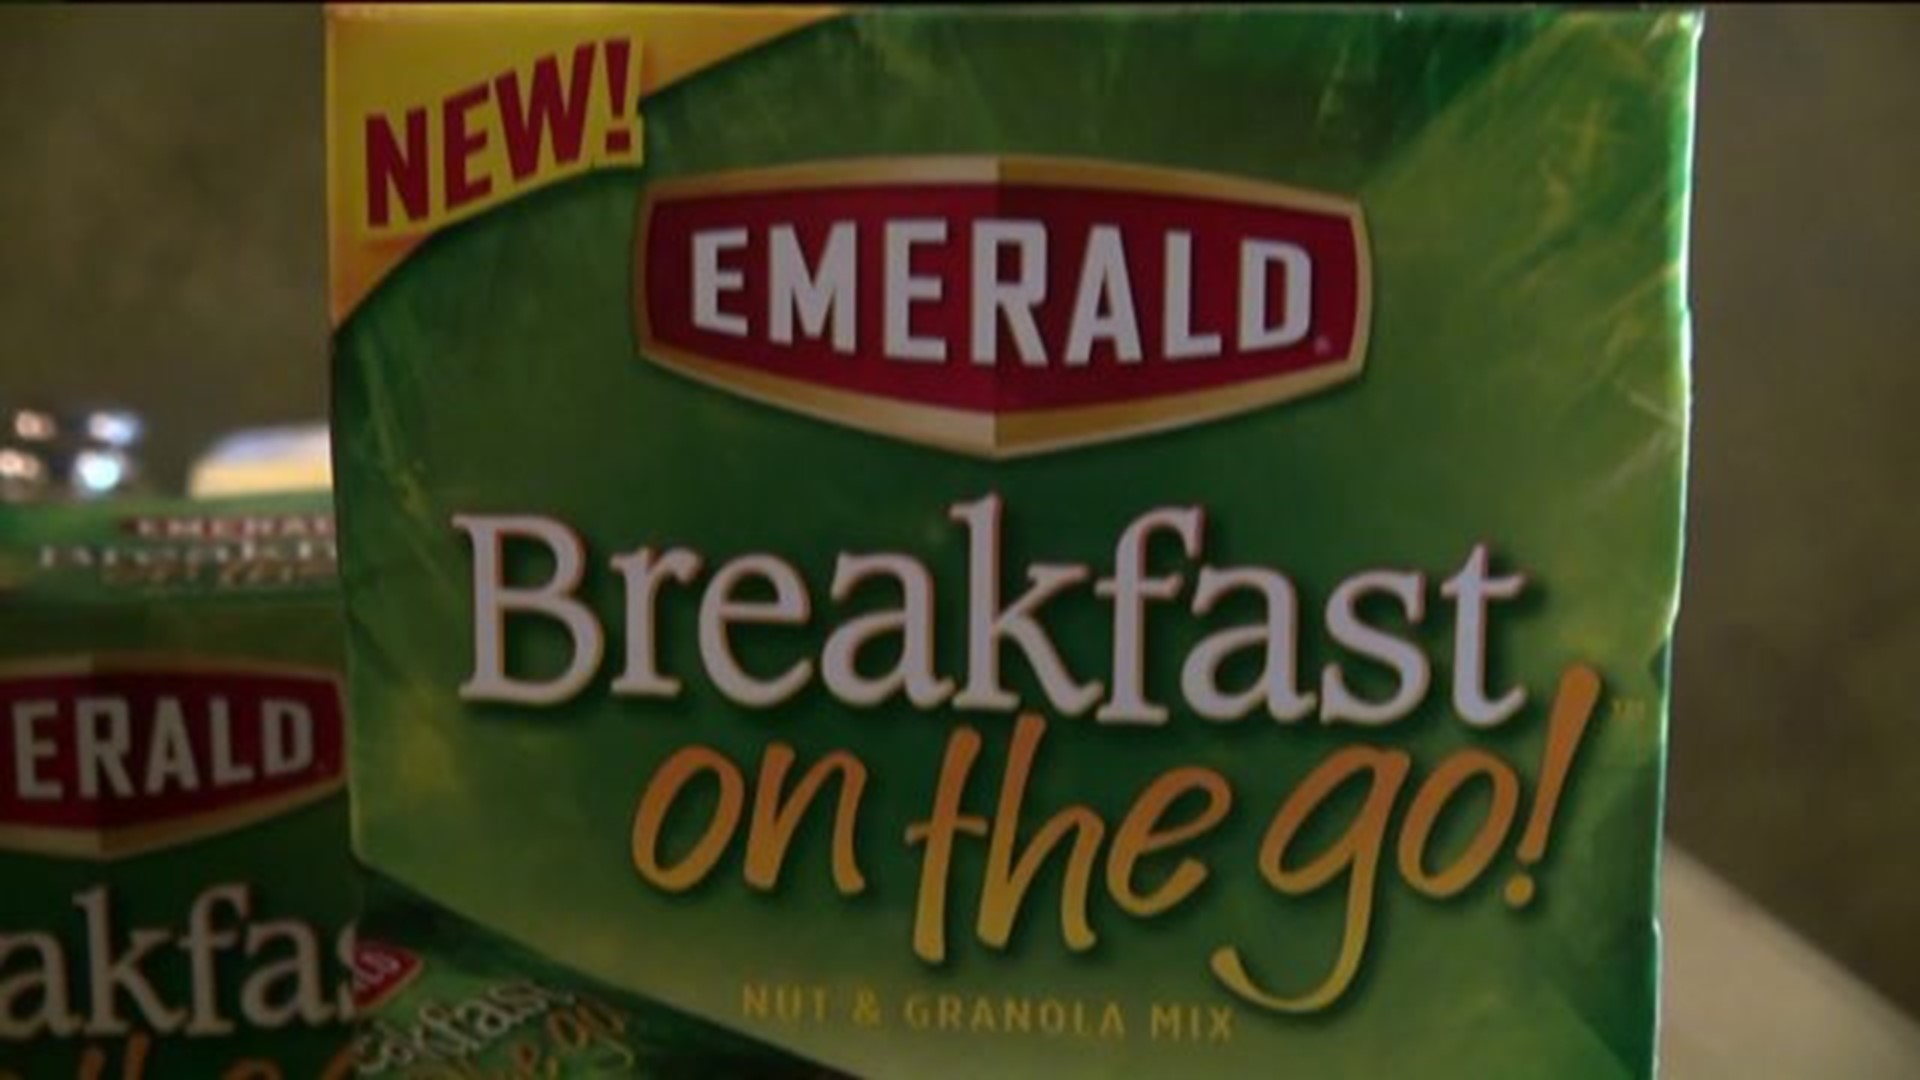 Taste Test: Emerald Breakfast on the Go!